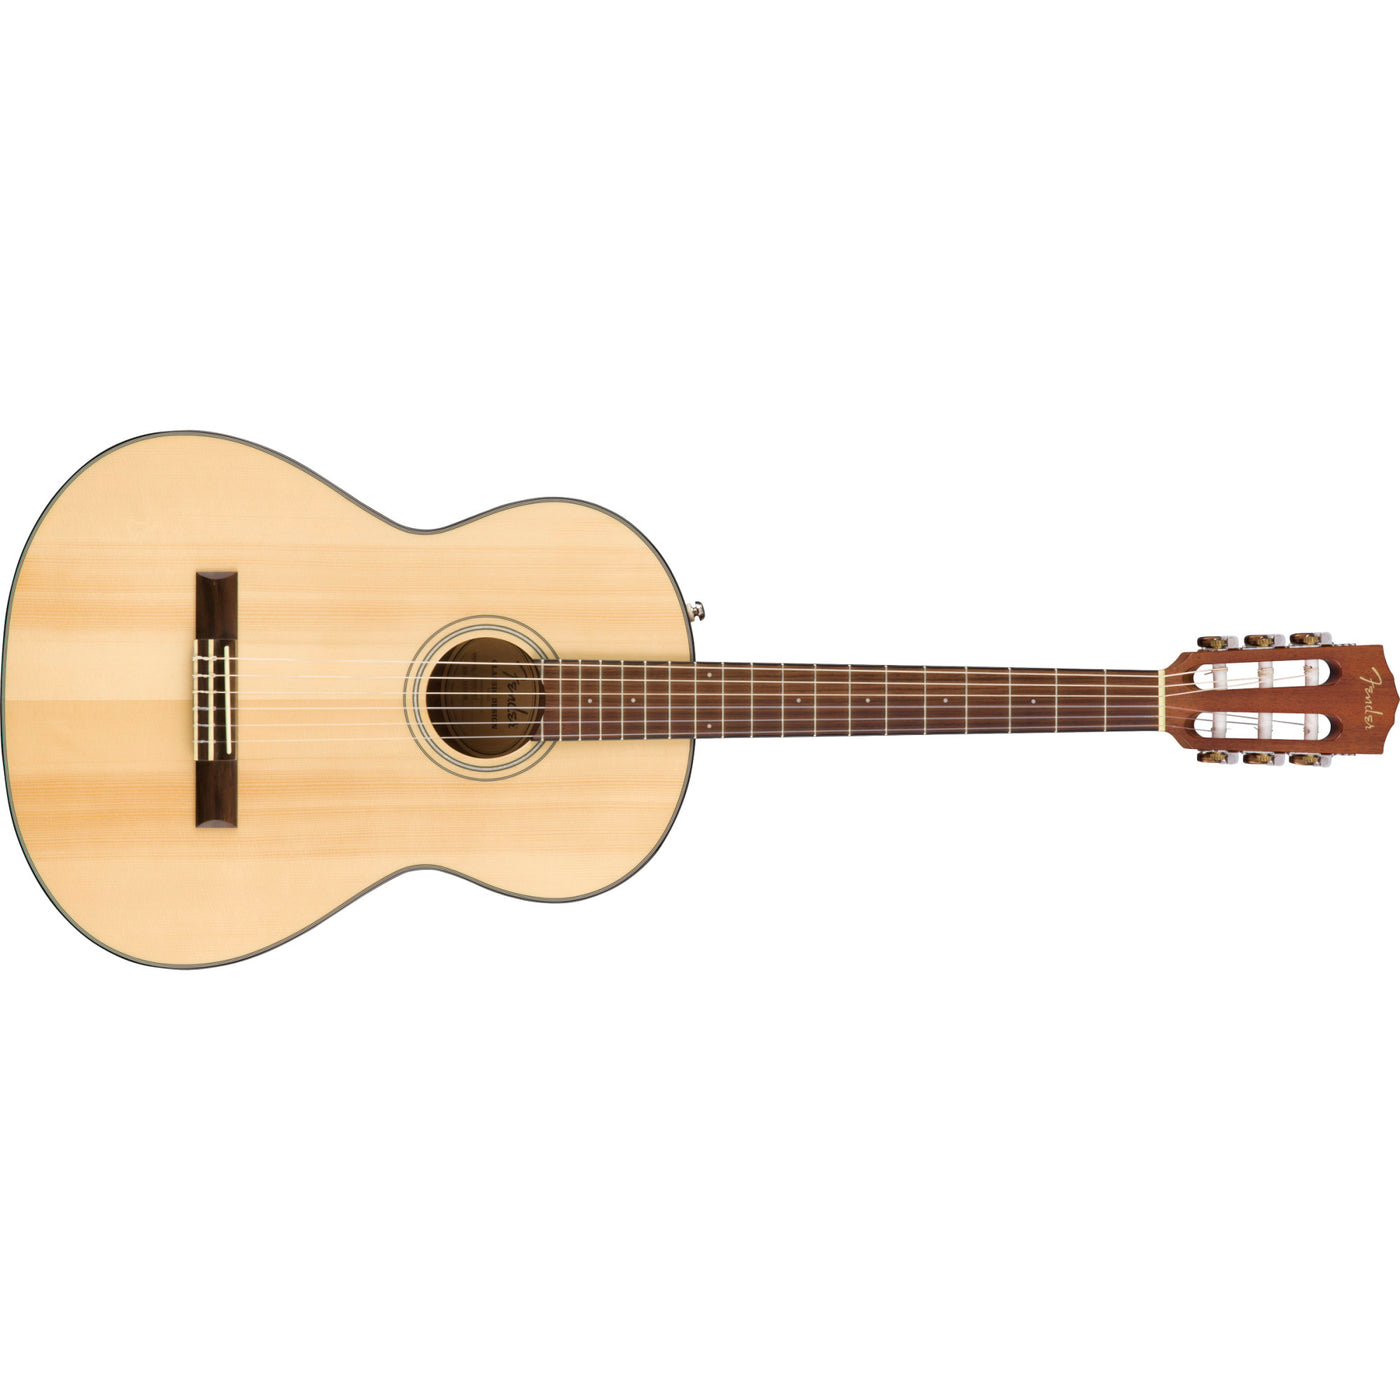 Fender CN-60S Acoustic Guitar, Natural (0970160521)